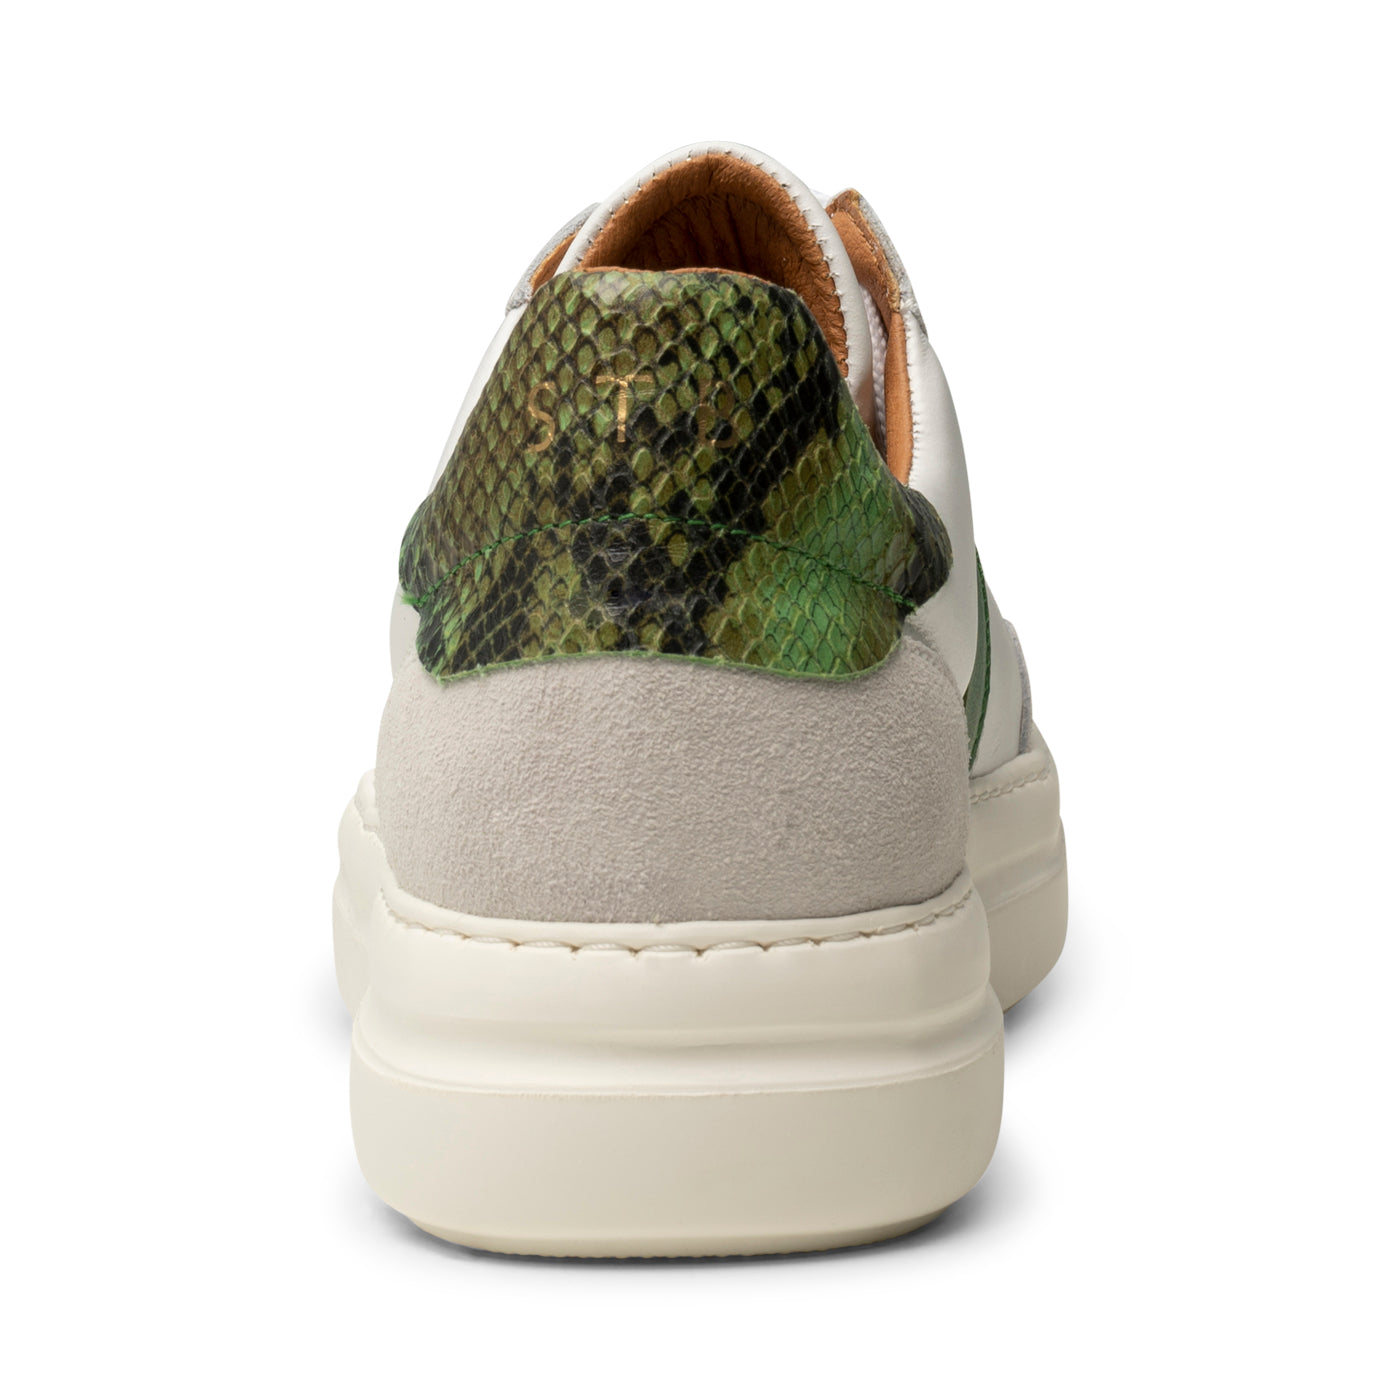 SHOE THE BEAR WOMENS Valda sneaker suede leather Sneakers 835 WHITE/GREEN MULTI